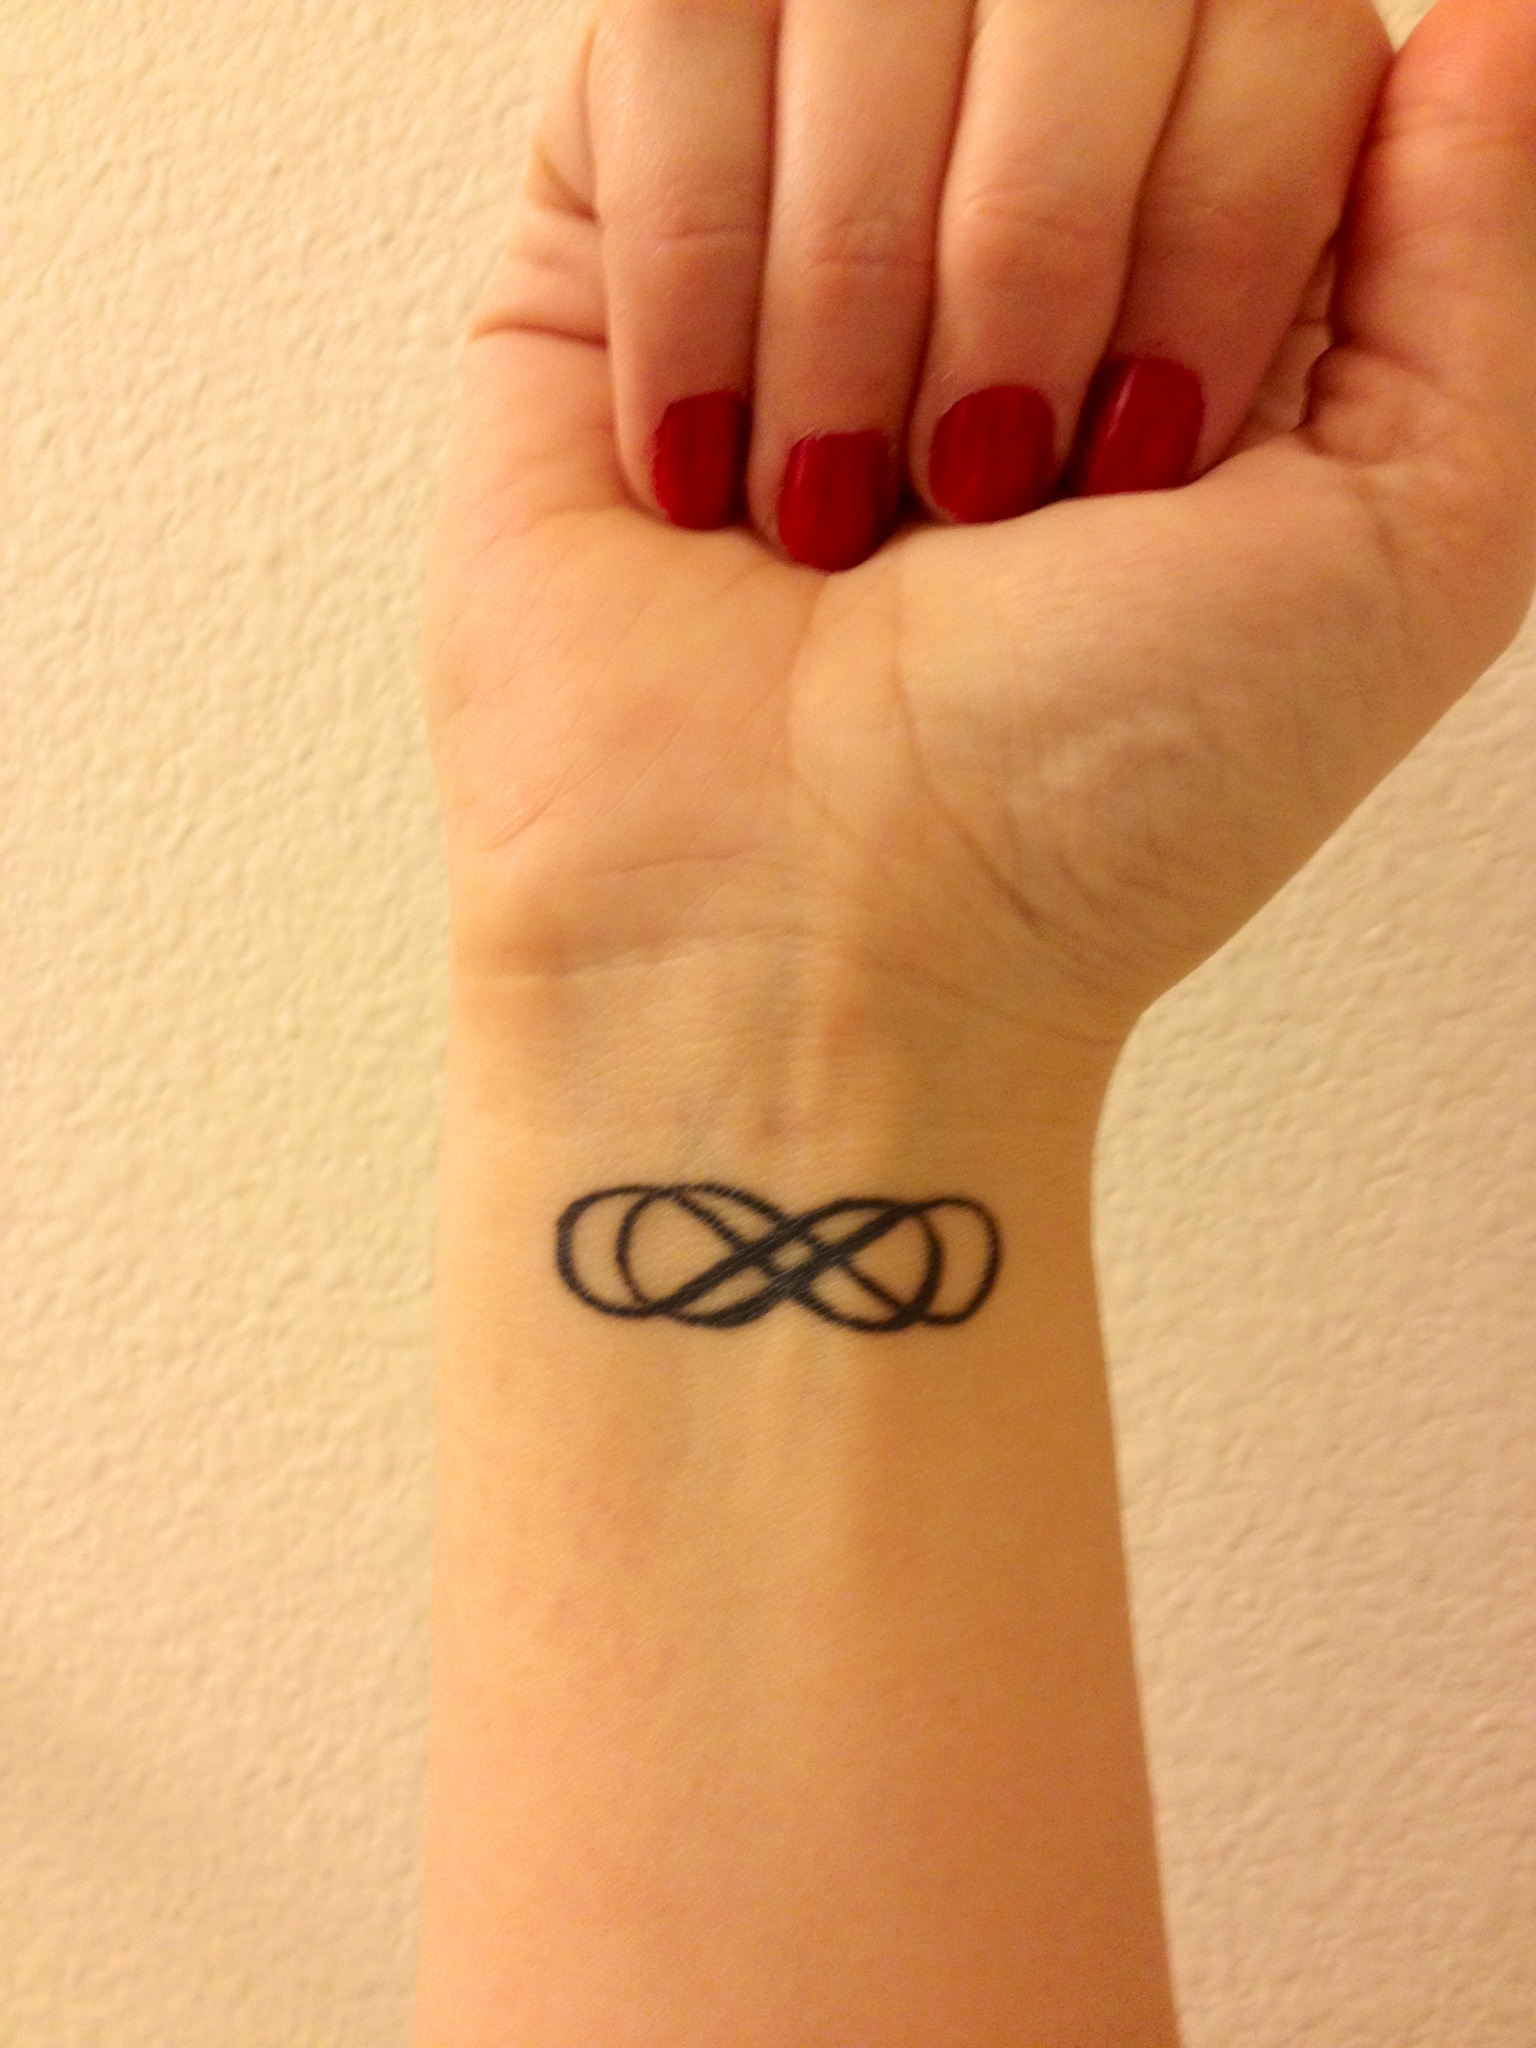 infinity纹身图片